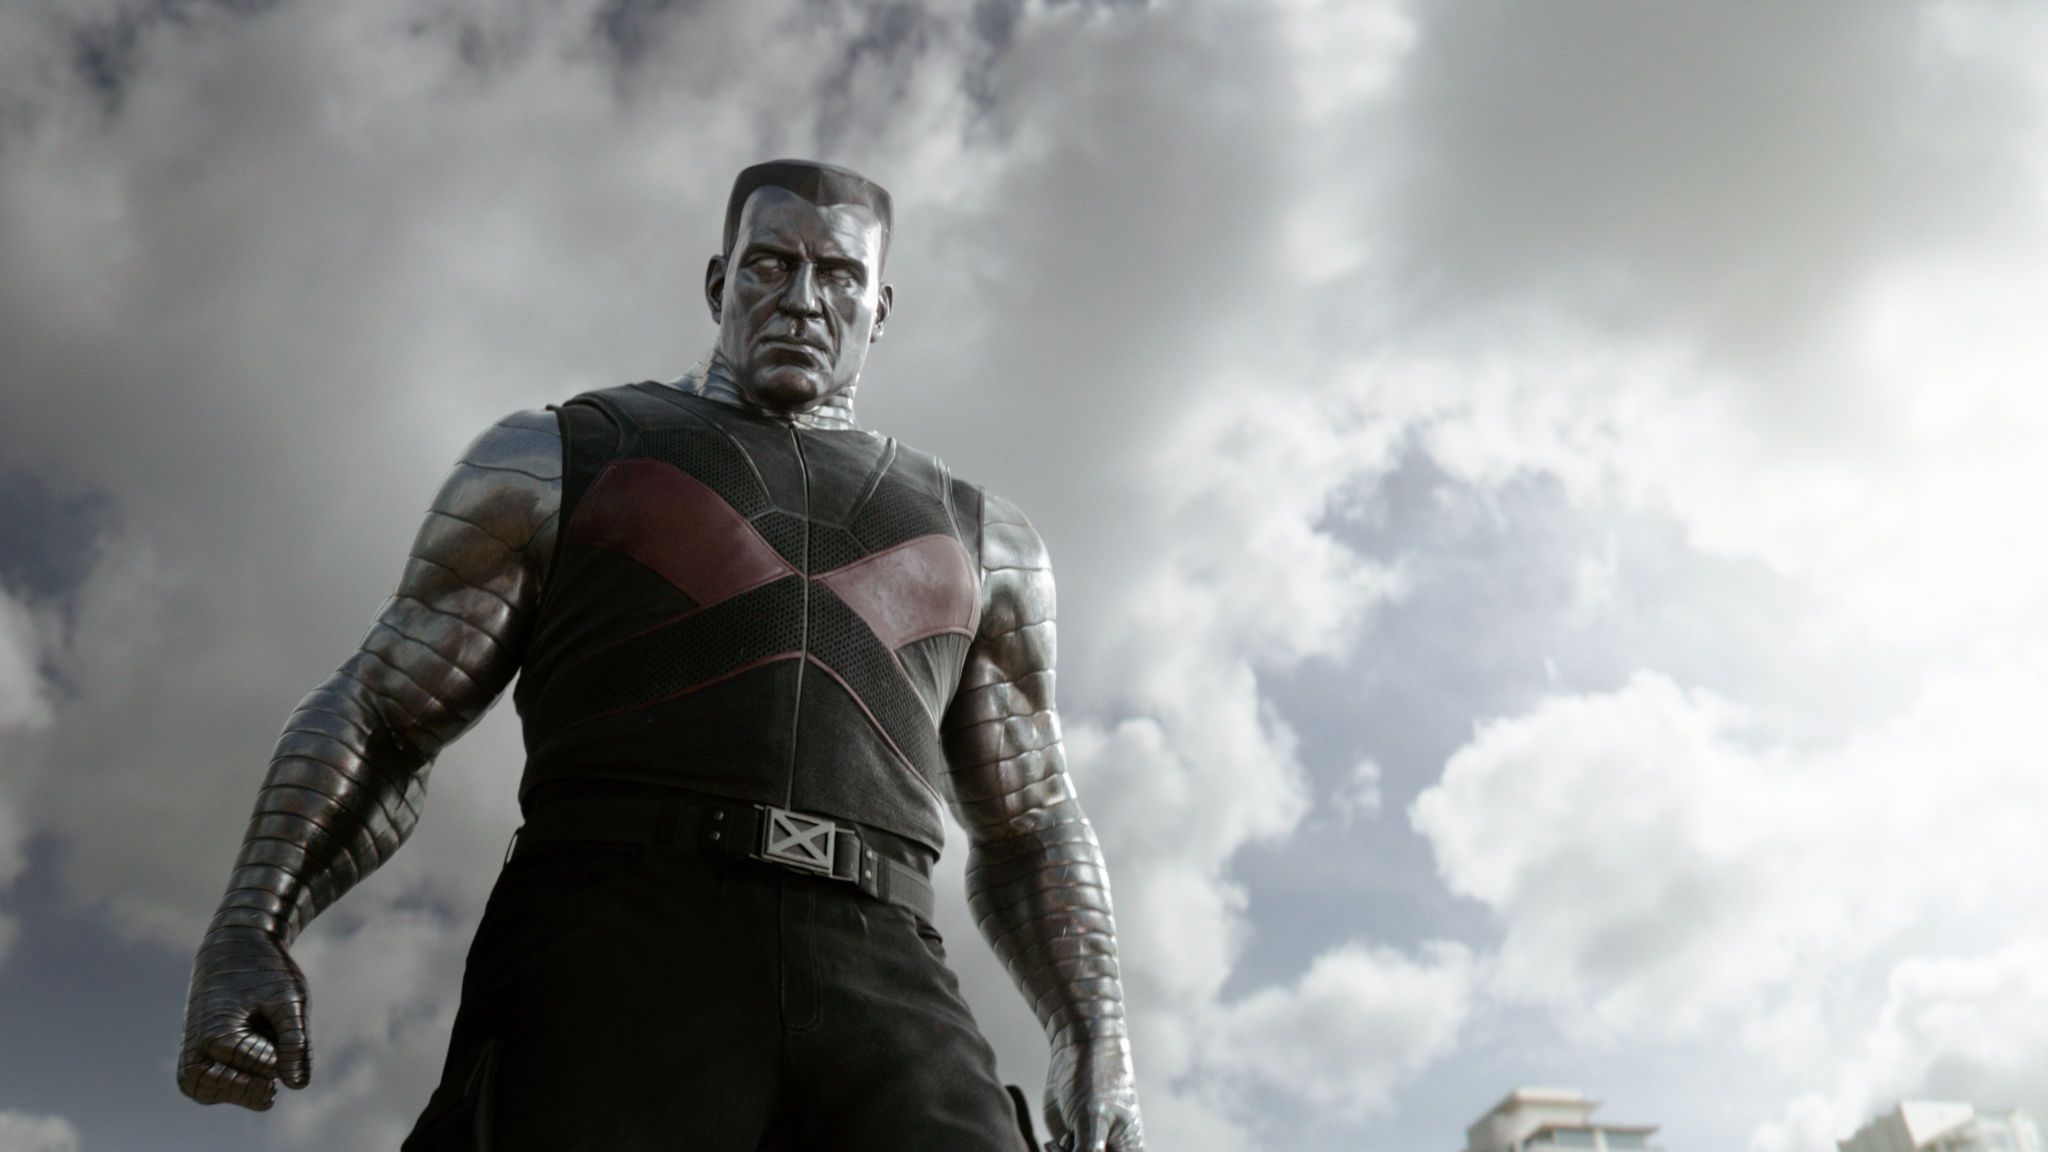 Deadpool Trailer Screengrab - Colossus